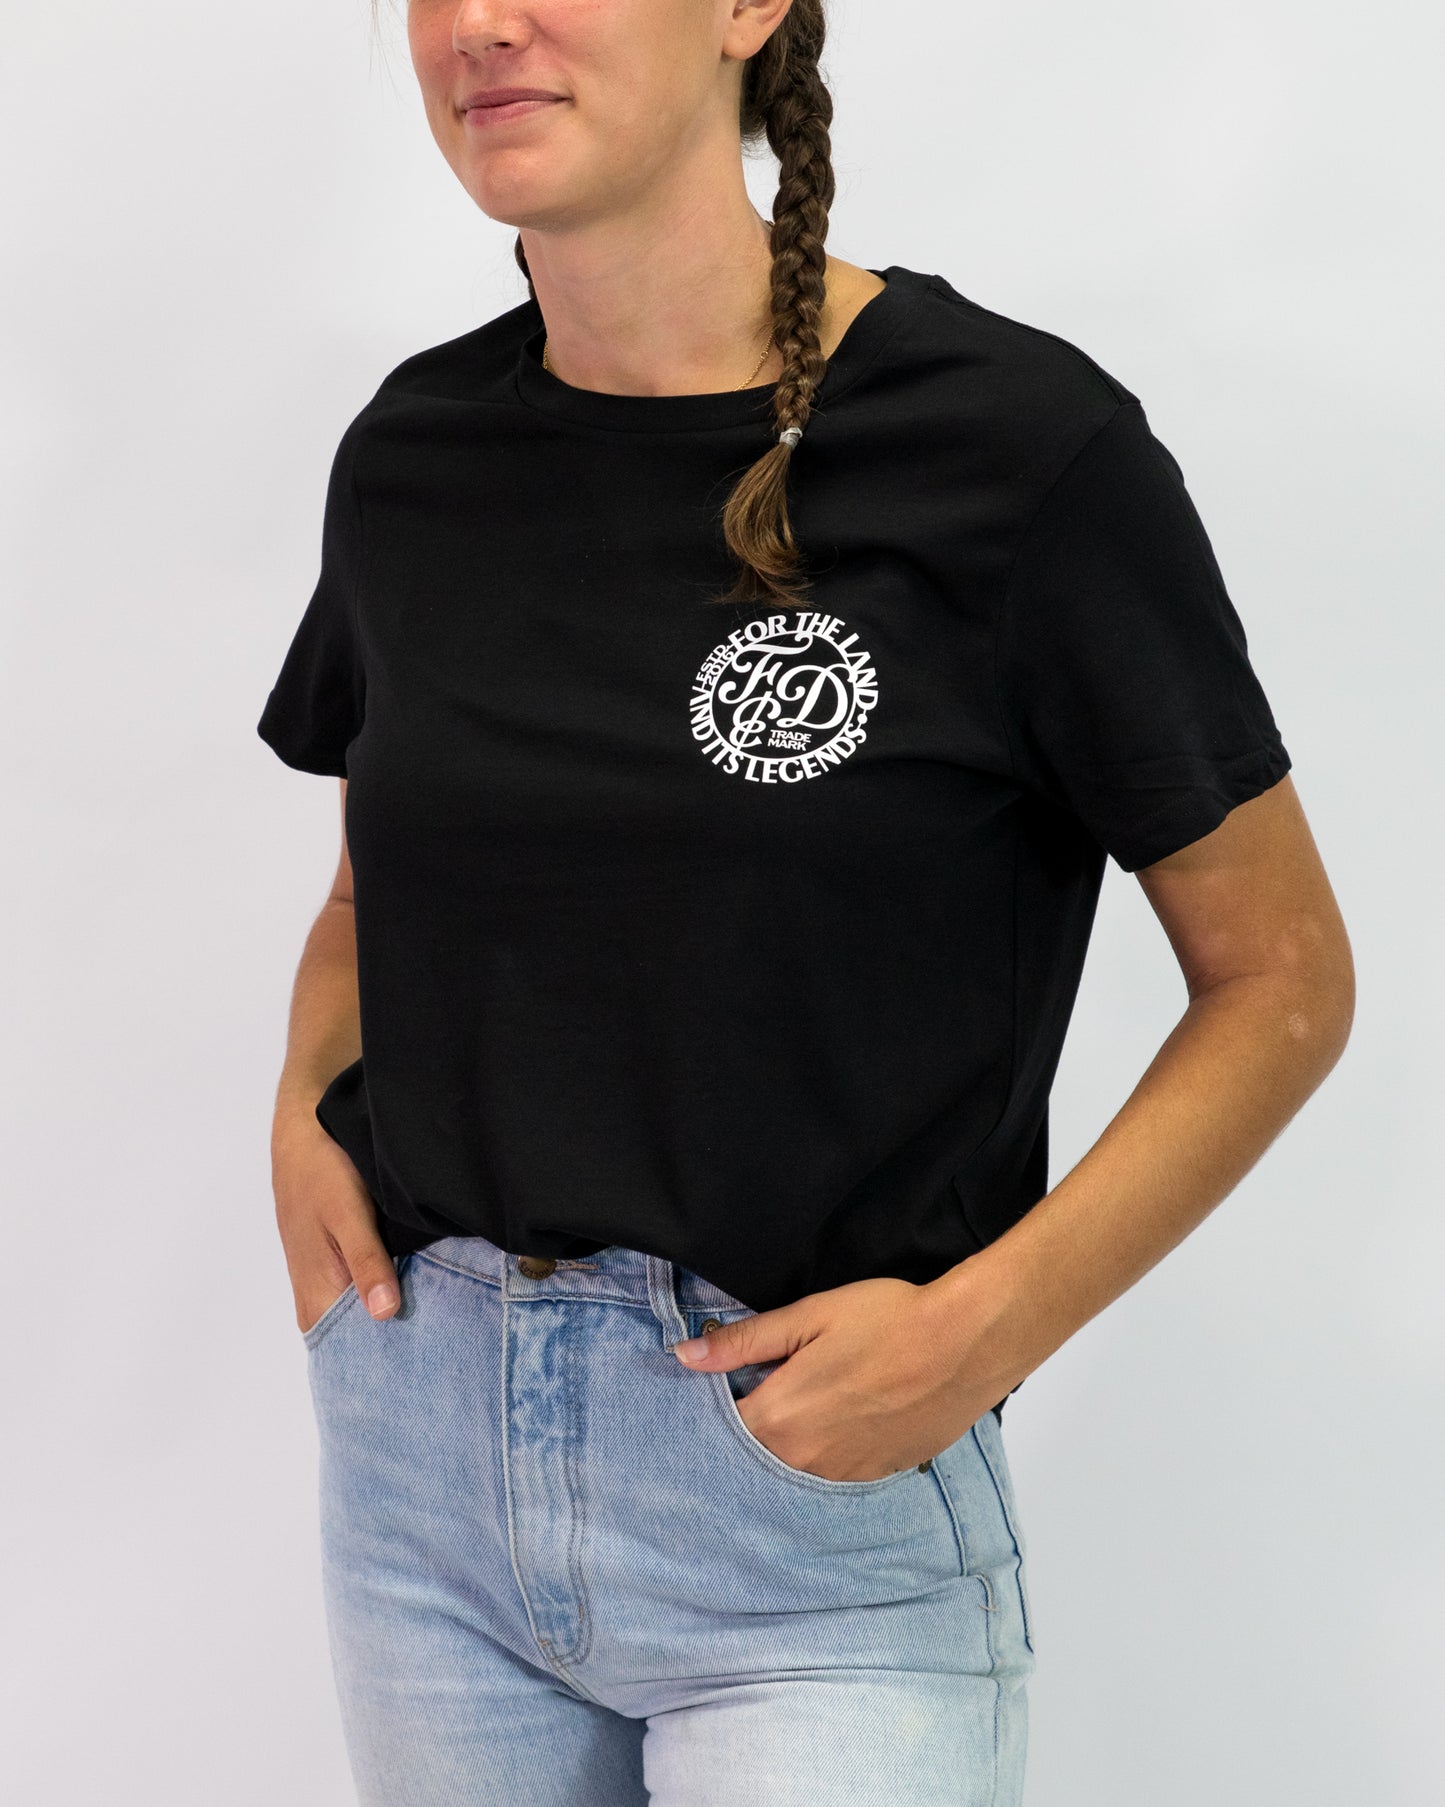 Livestock Womens T-Shirt Black